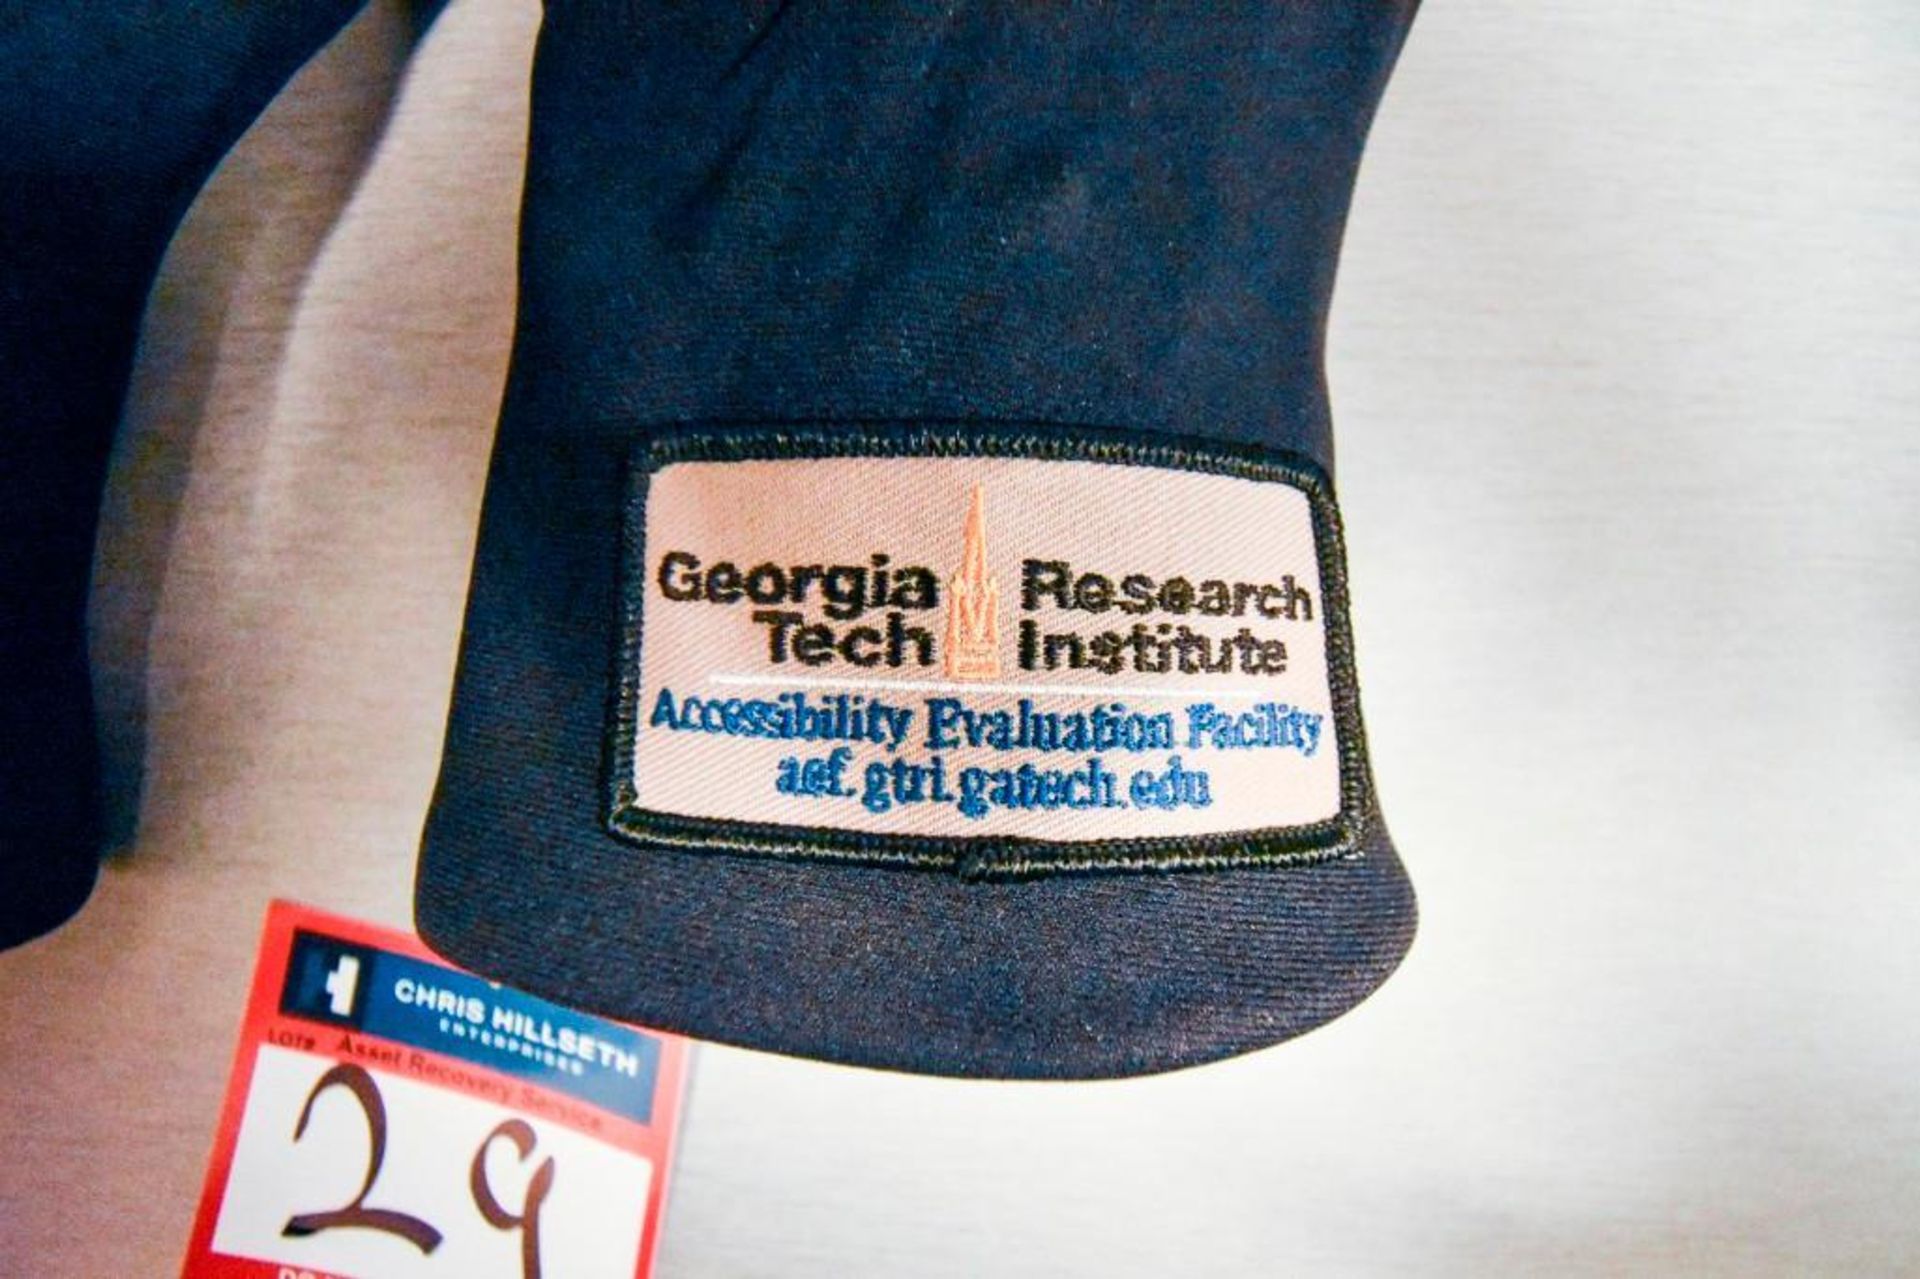 Georgia Tech Research Institute Arthritis Test Gloves - Image 3 of 3